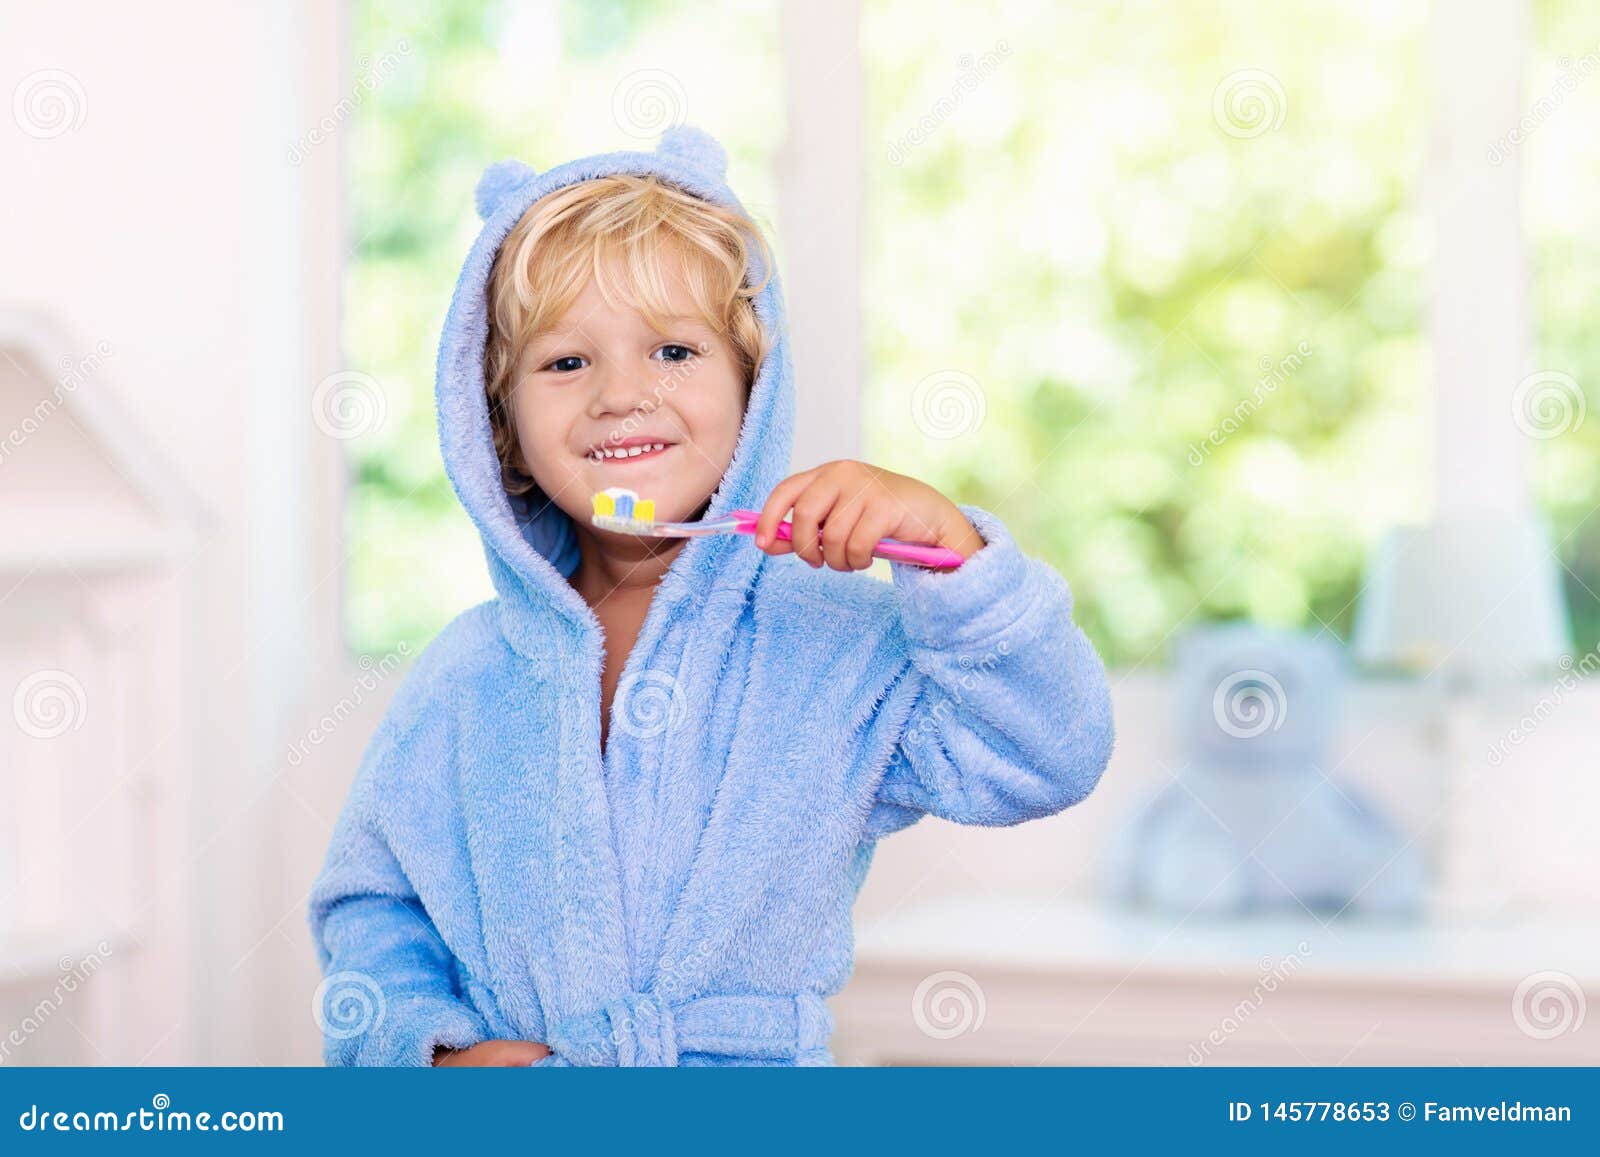 child brushing teeth. kids tooth brush